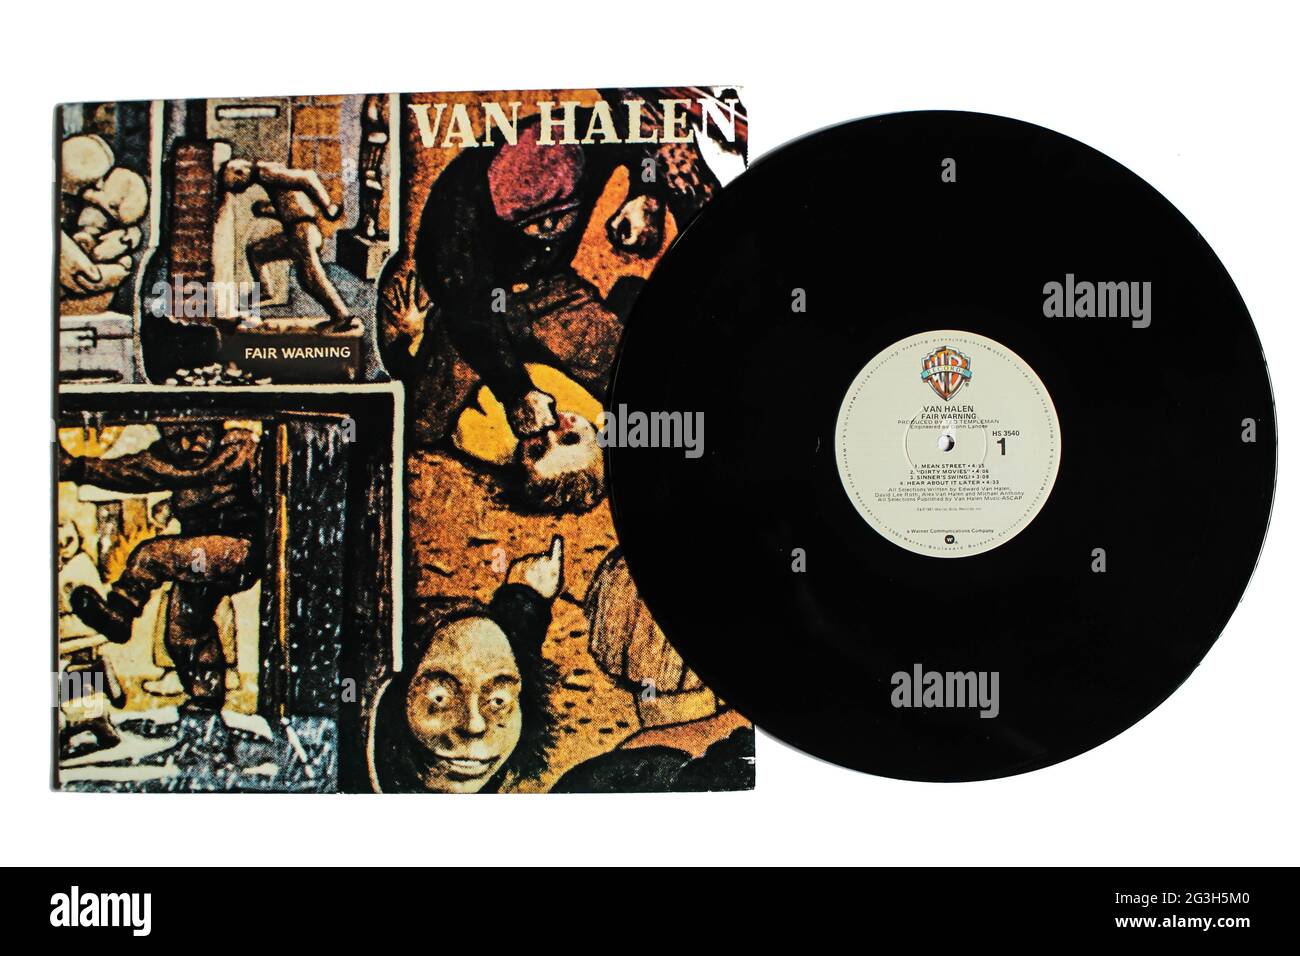 Hard rock, heavy metal and glam metal band, Van Halen music album on vinyl record LP disc.  Titled: Fair Warning album cover Stock Photo